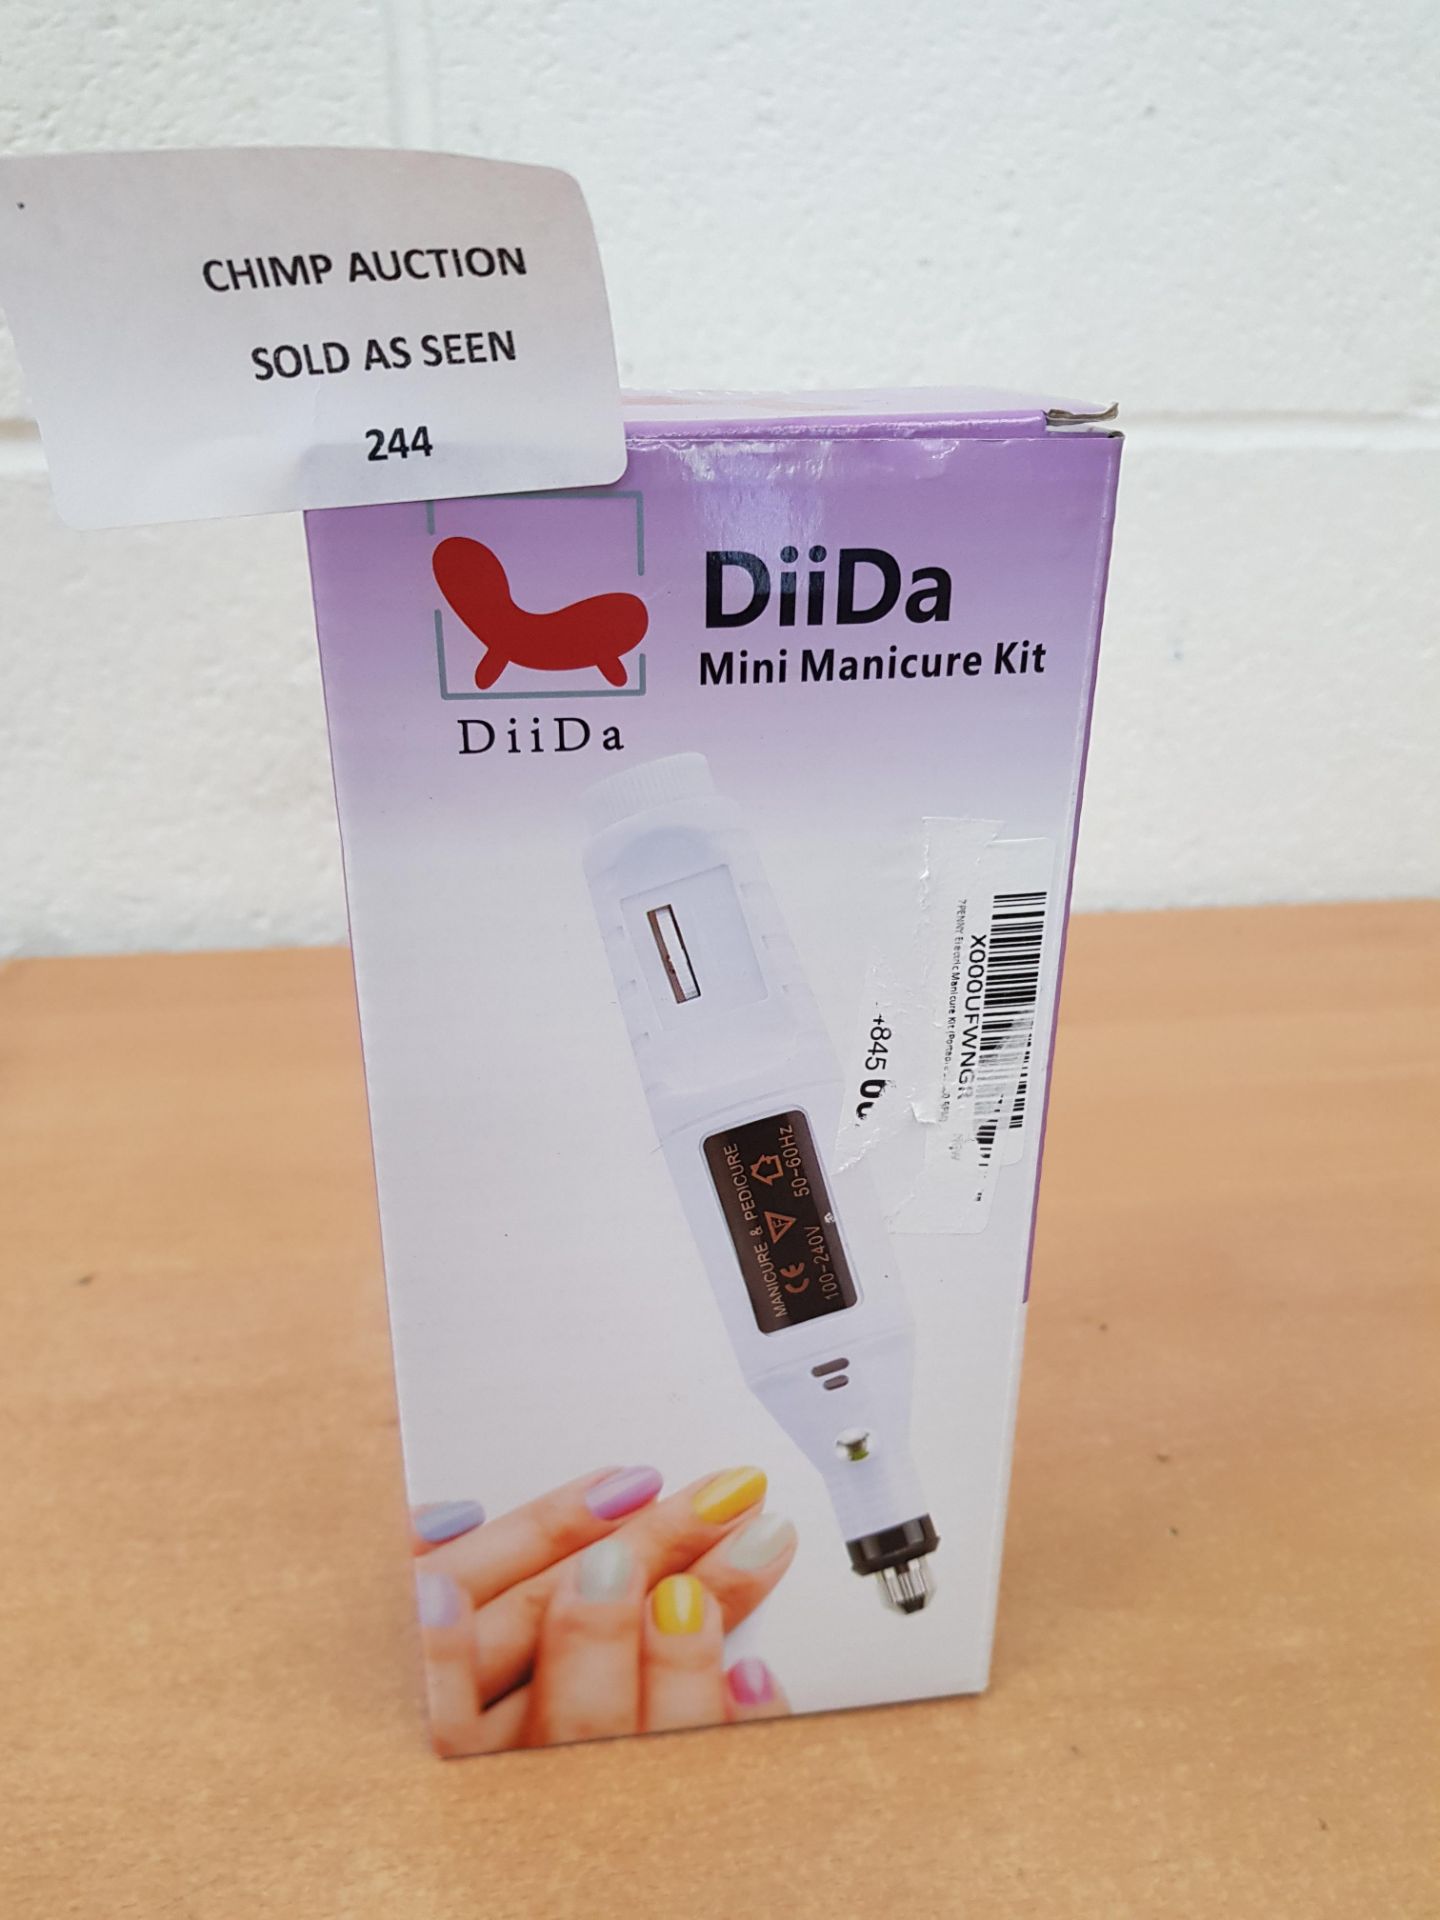 DiiDa Mini Manicure Kit